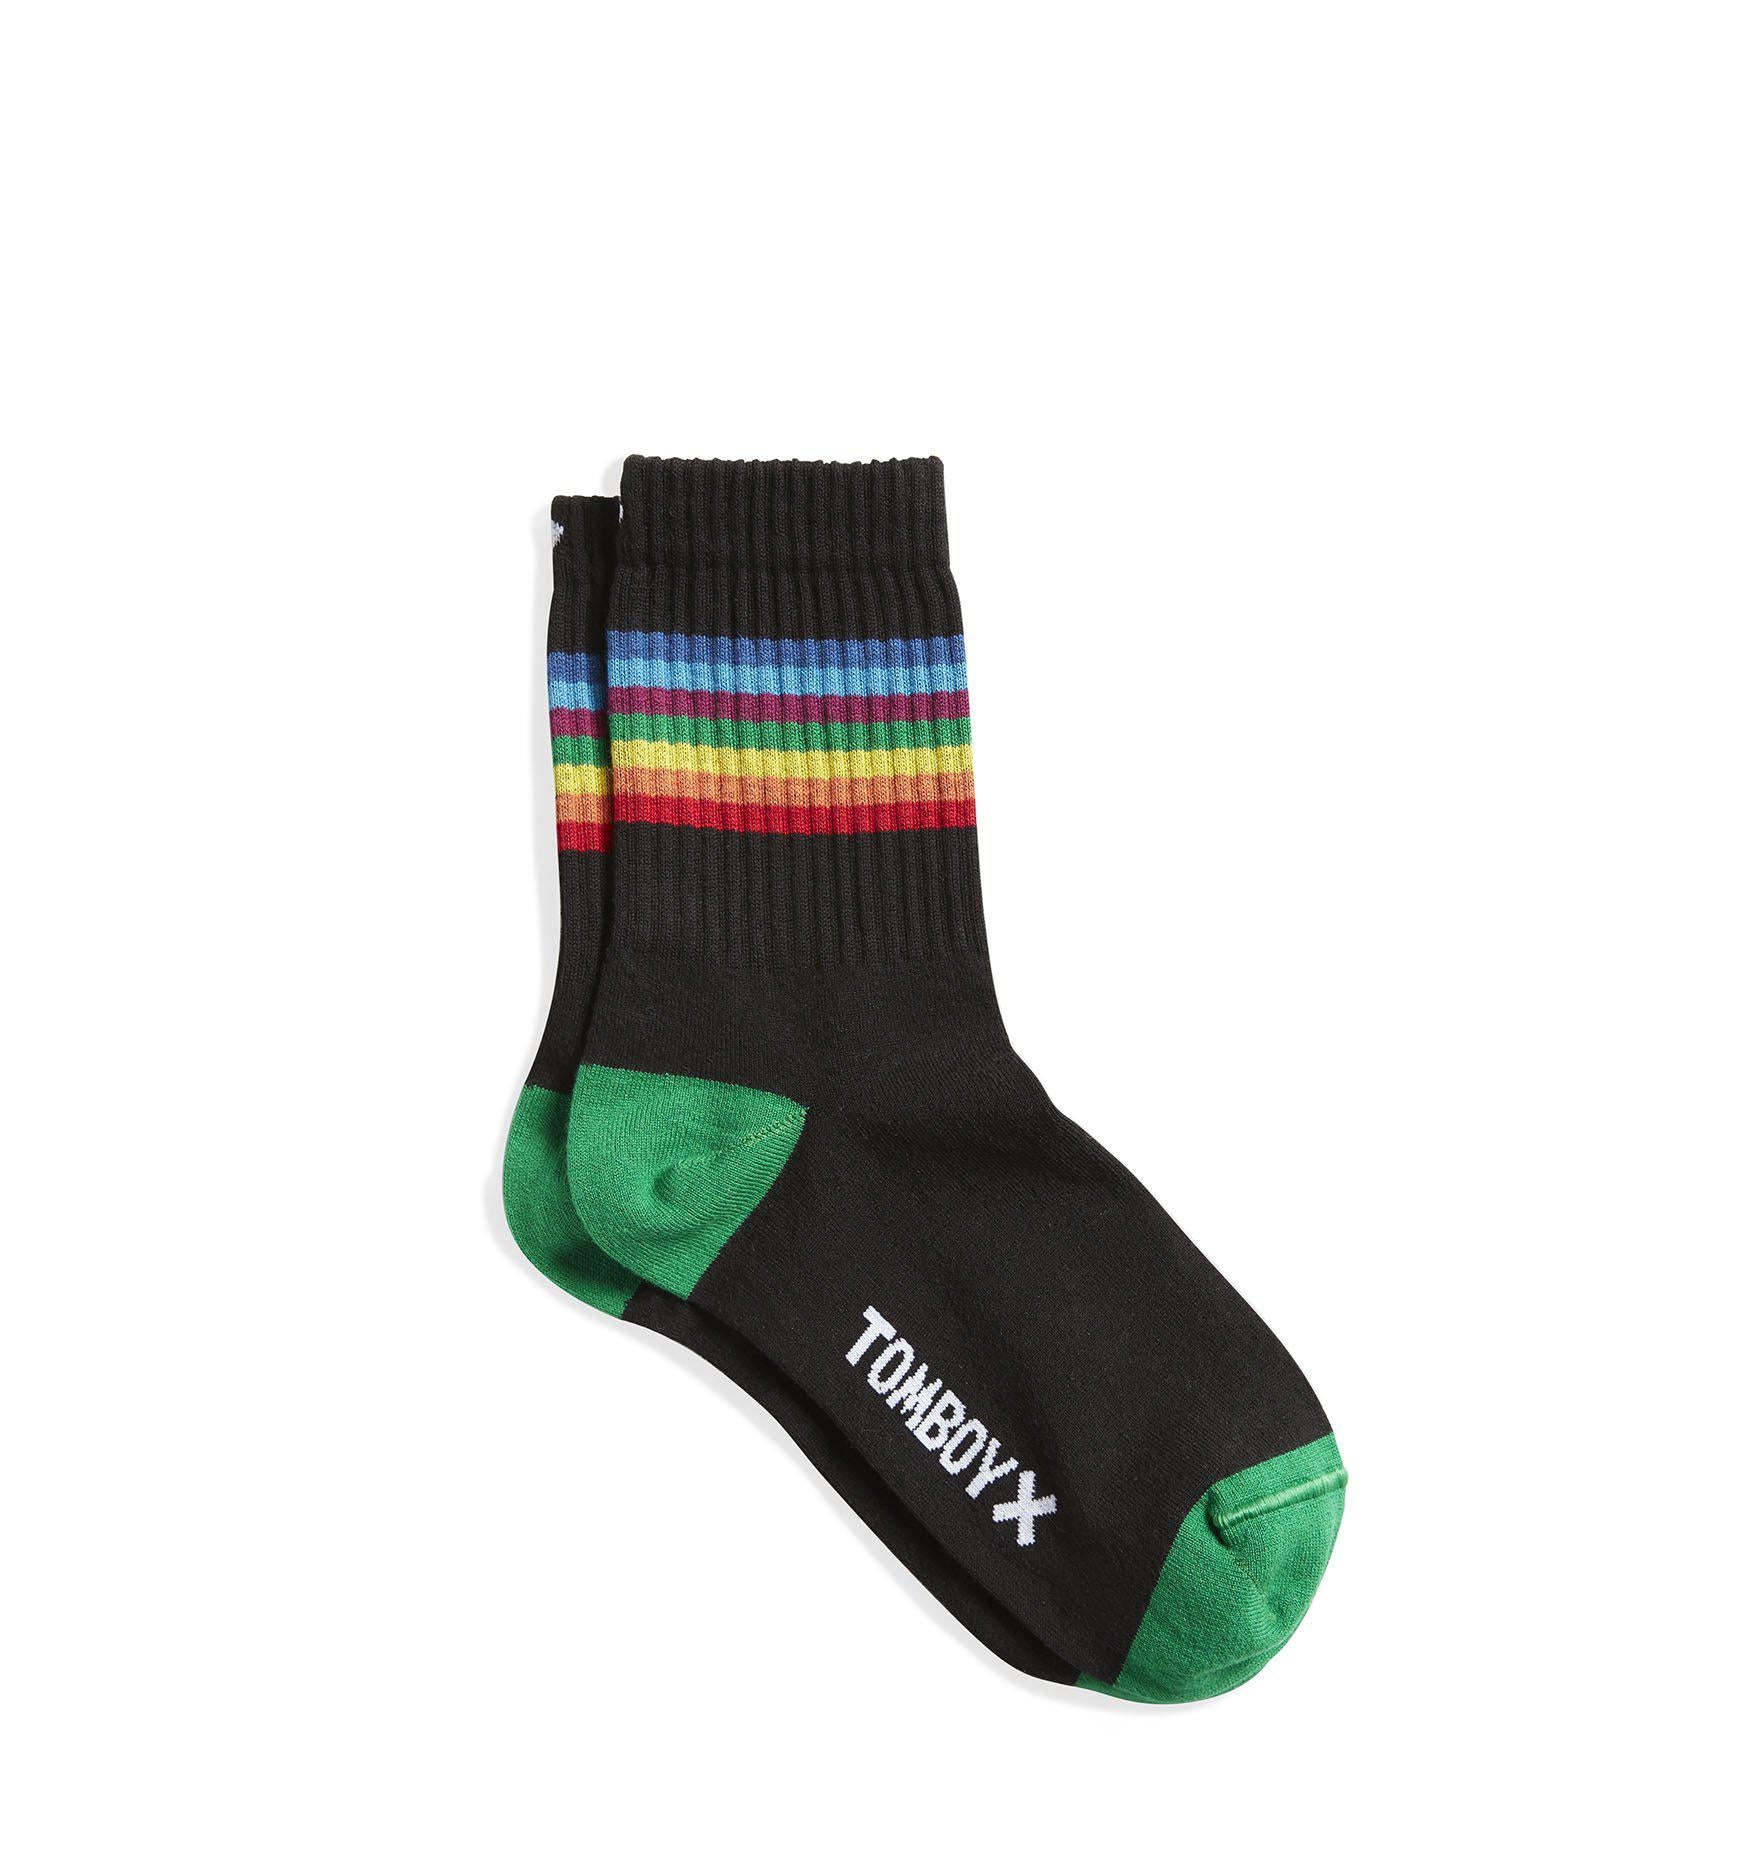 Exclusive: Anklet Crew Socks - TomboyX Black with Rainbow-Socks-TomboyX